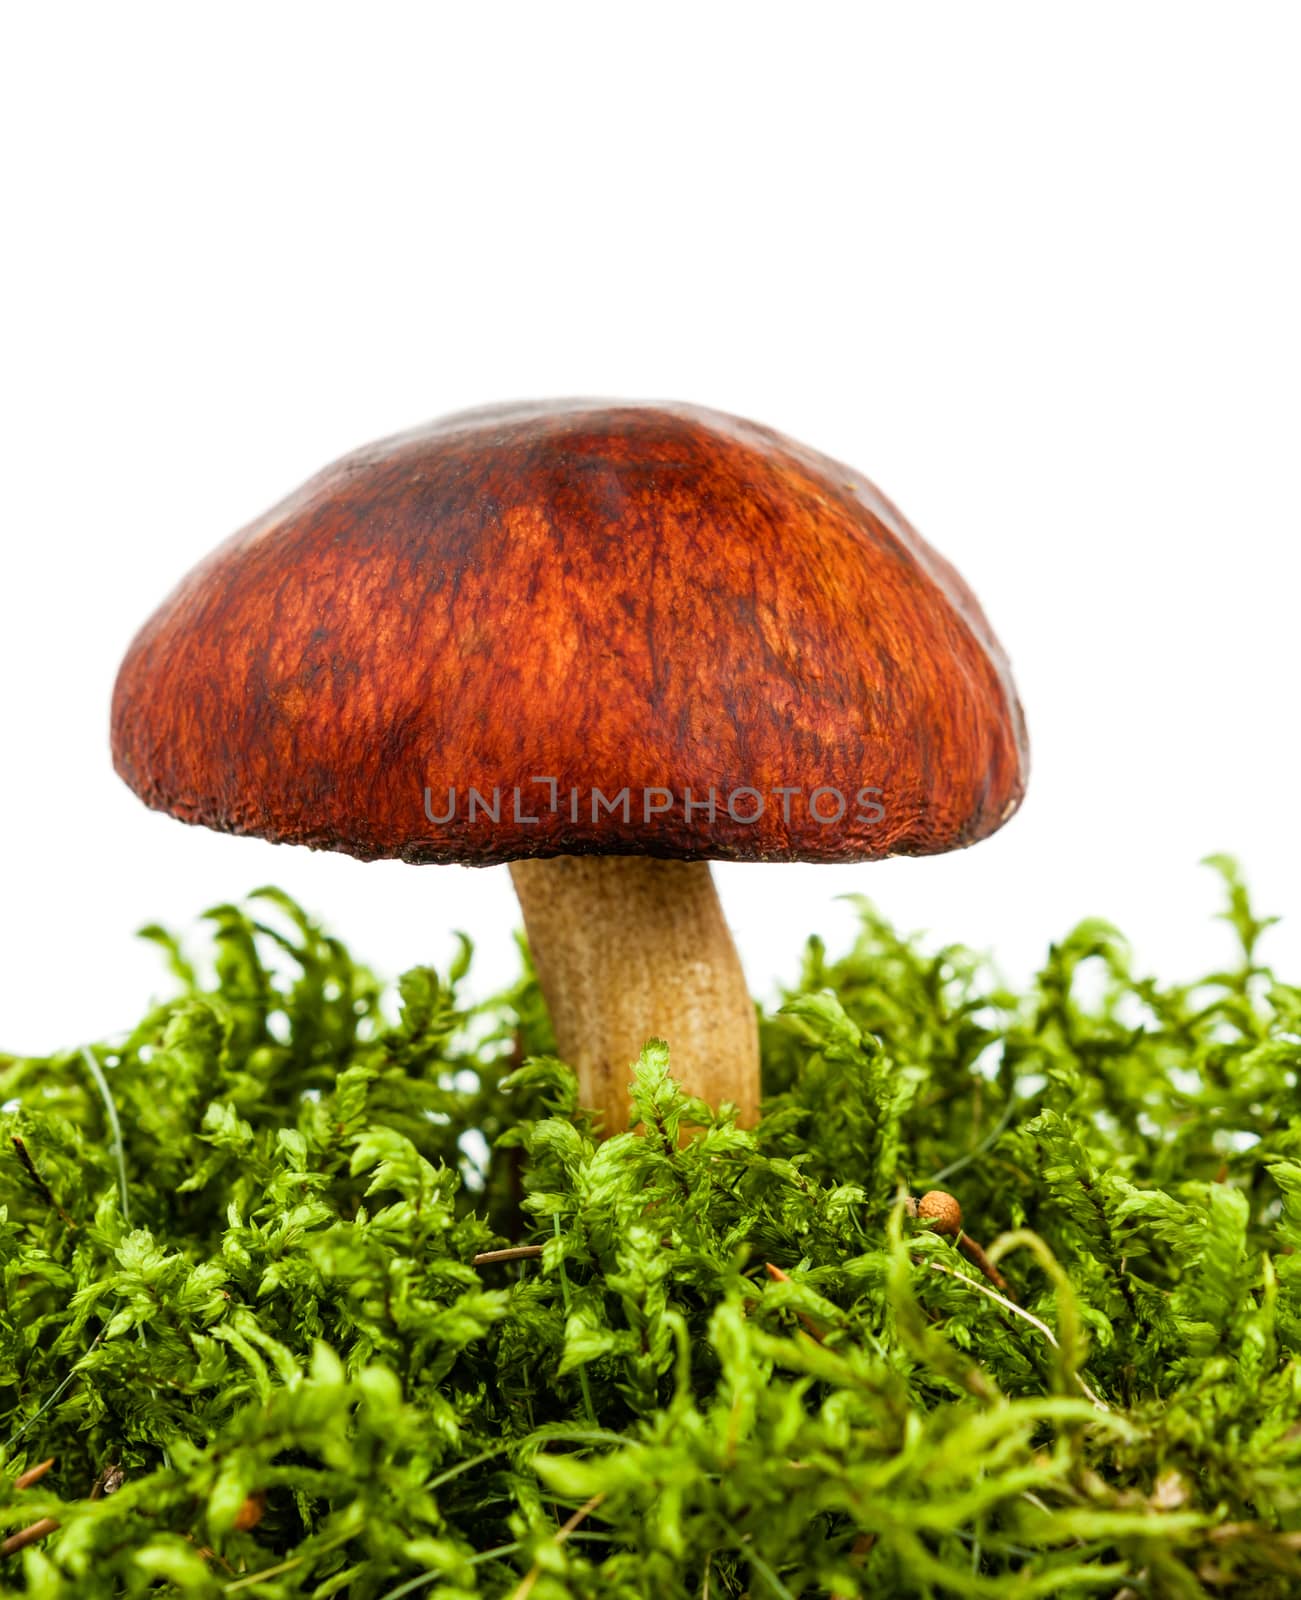  forest mushroom by claraveritas